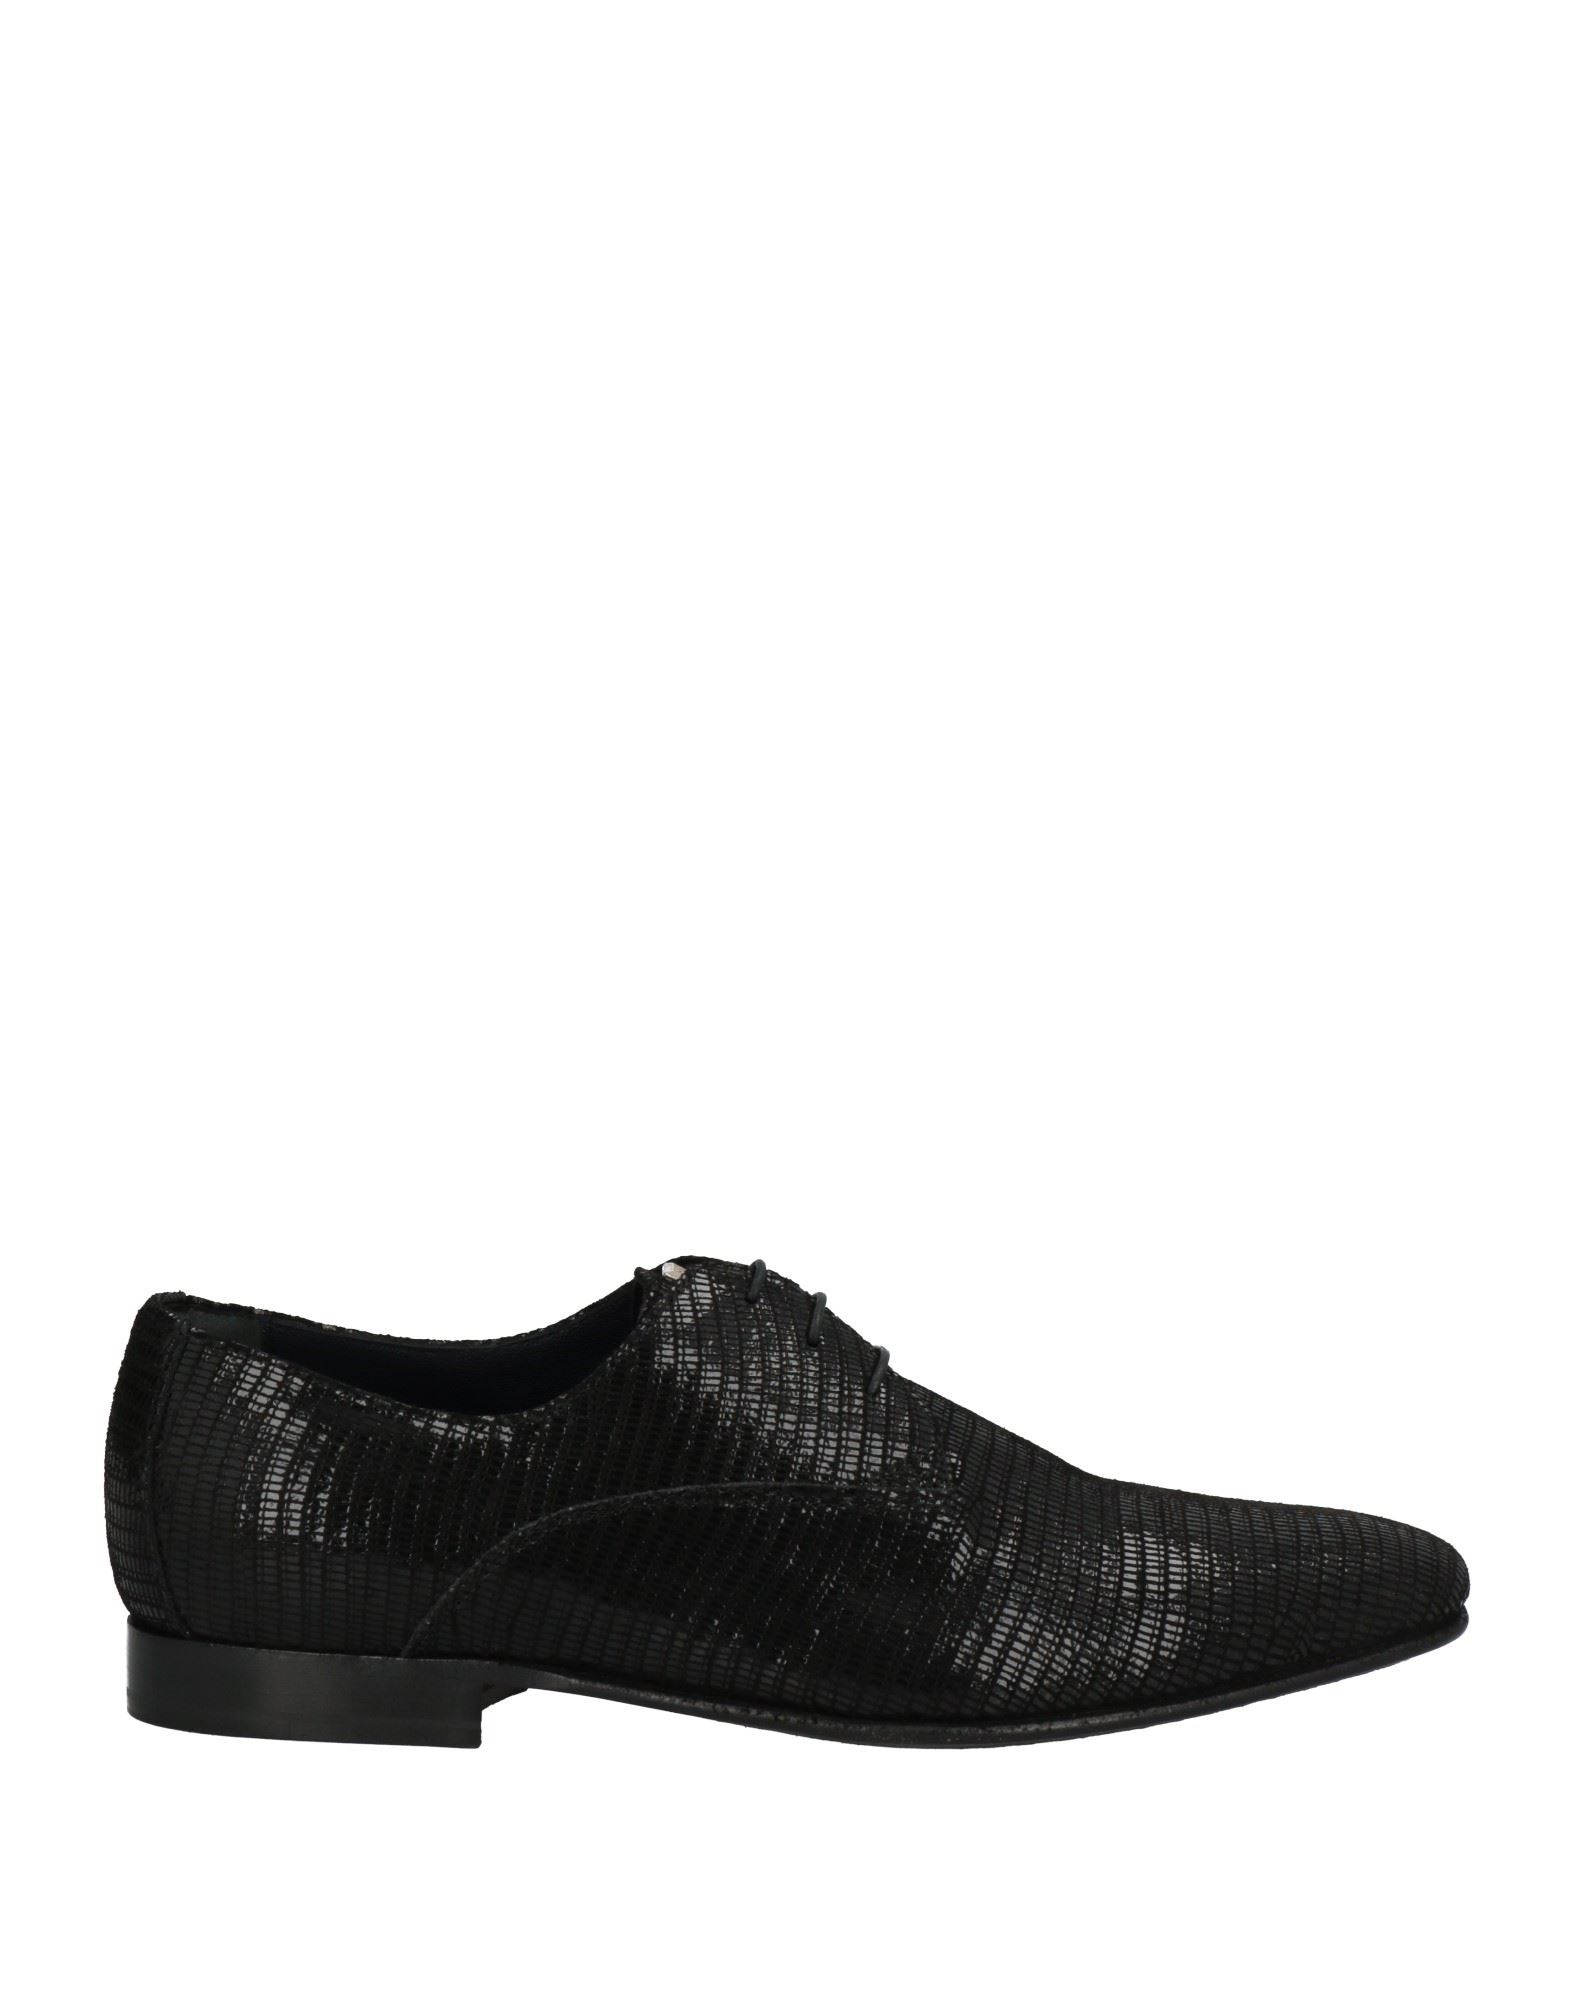 Carlo Pignatelli Lace-up Shoes In Black